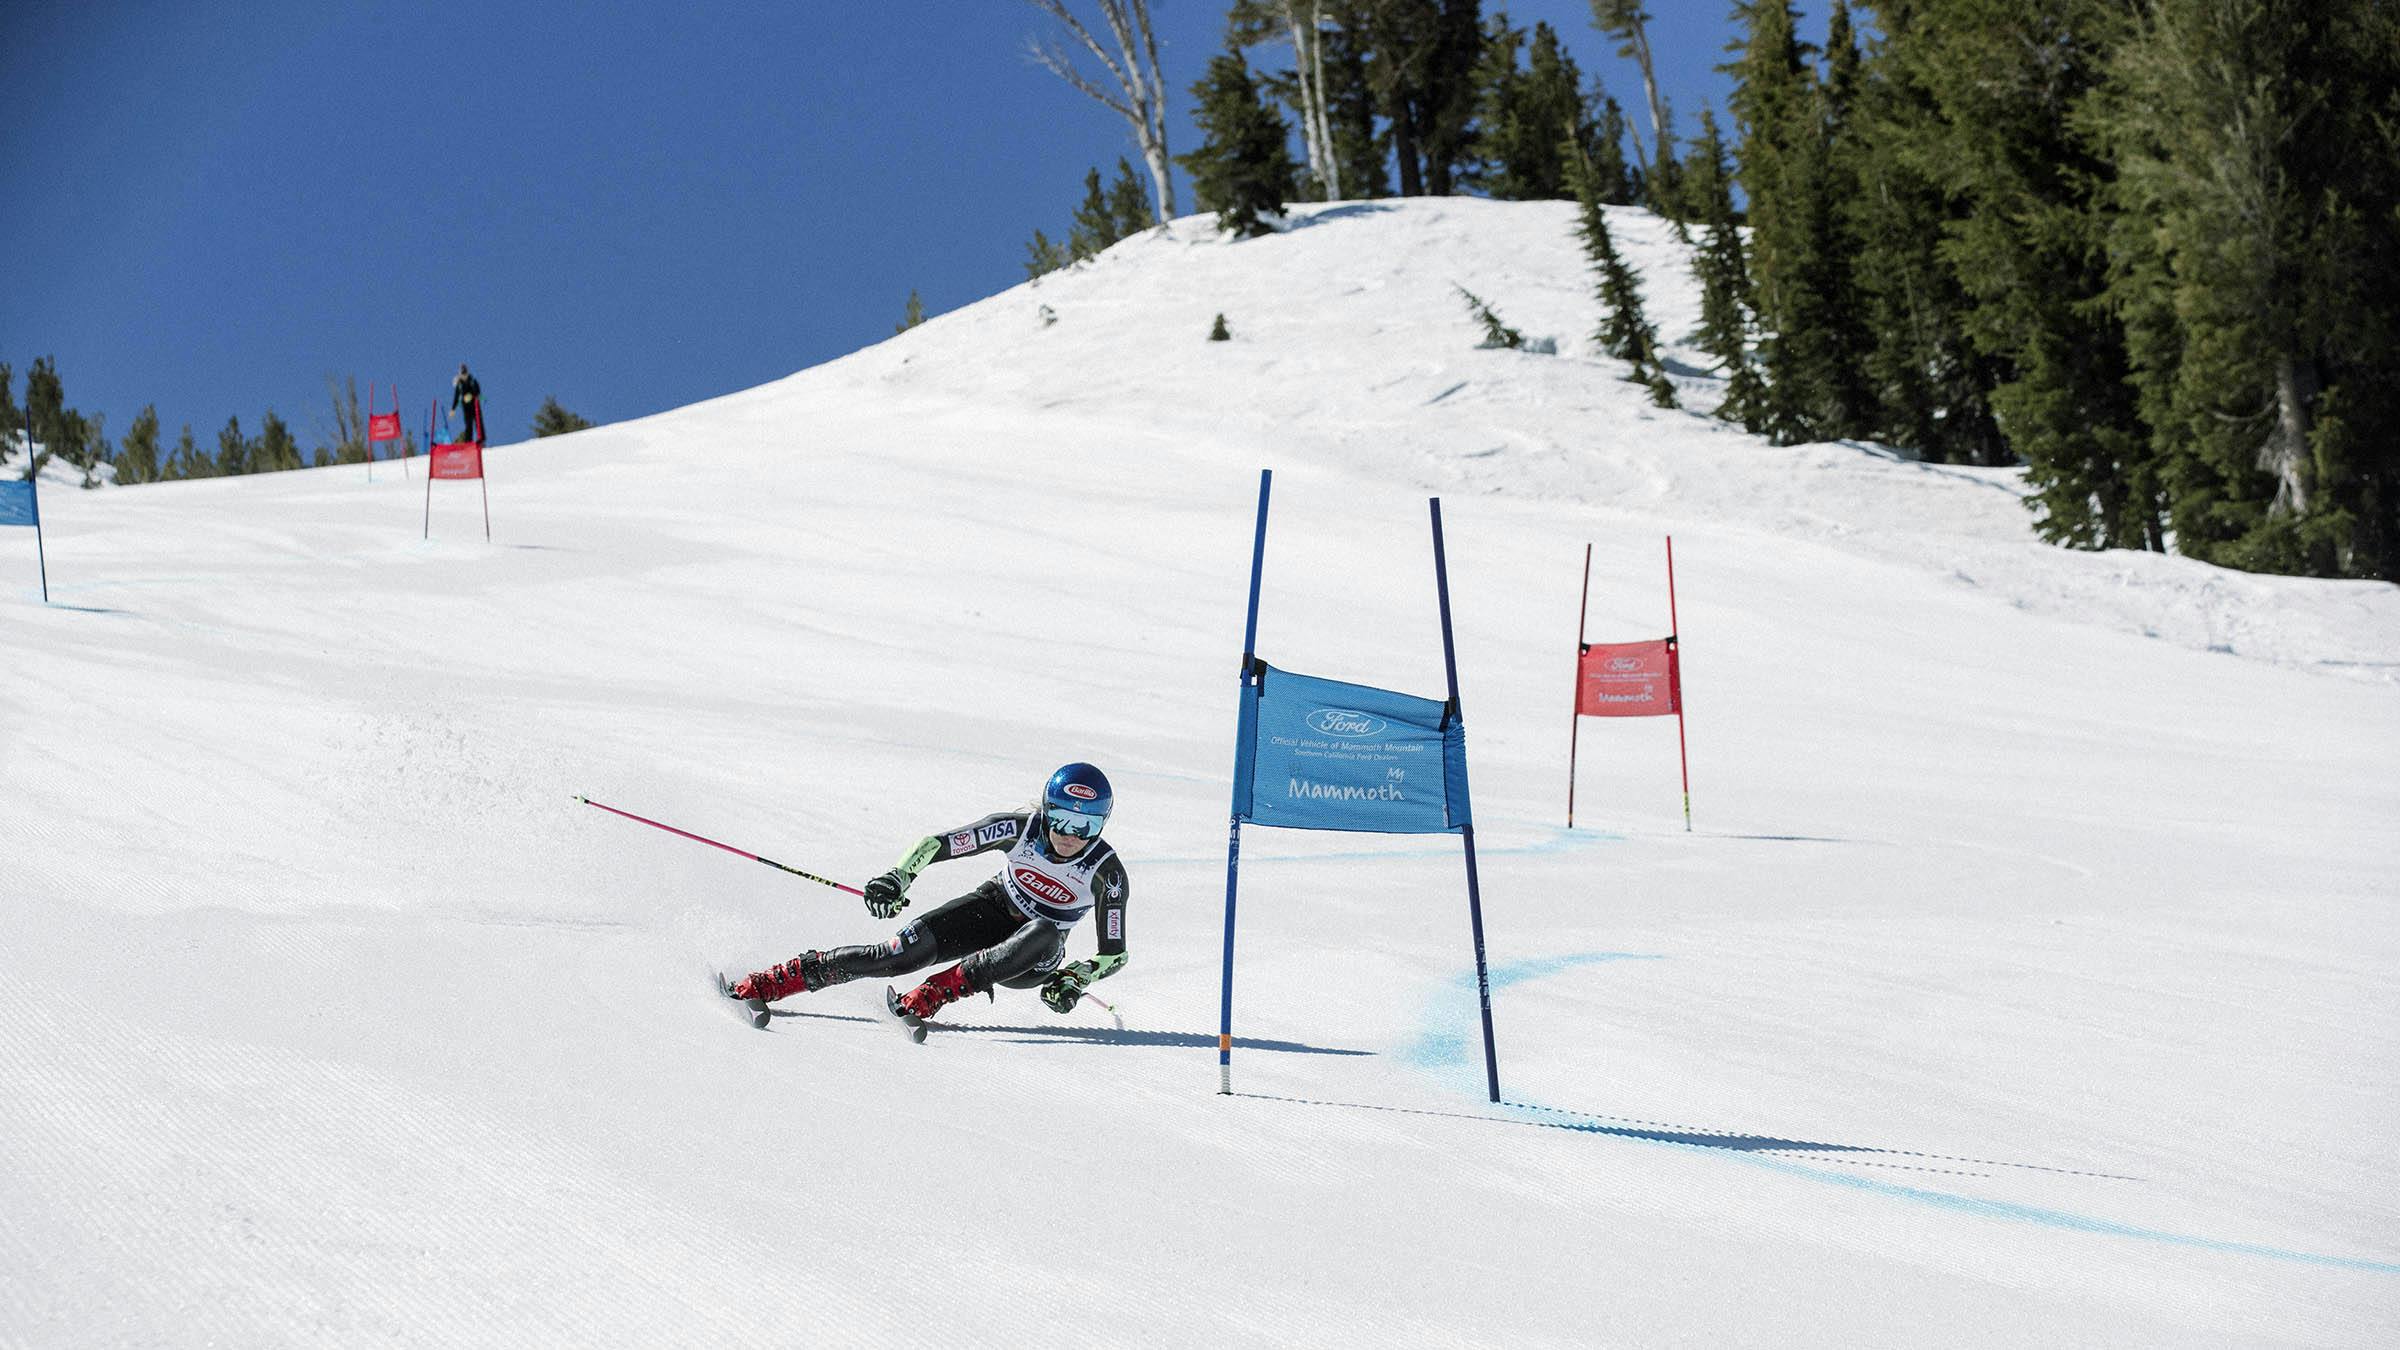 Mikaela Shiffrin ski racing